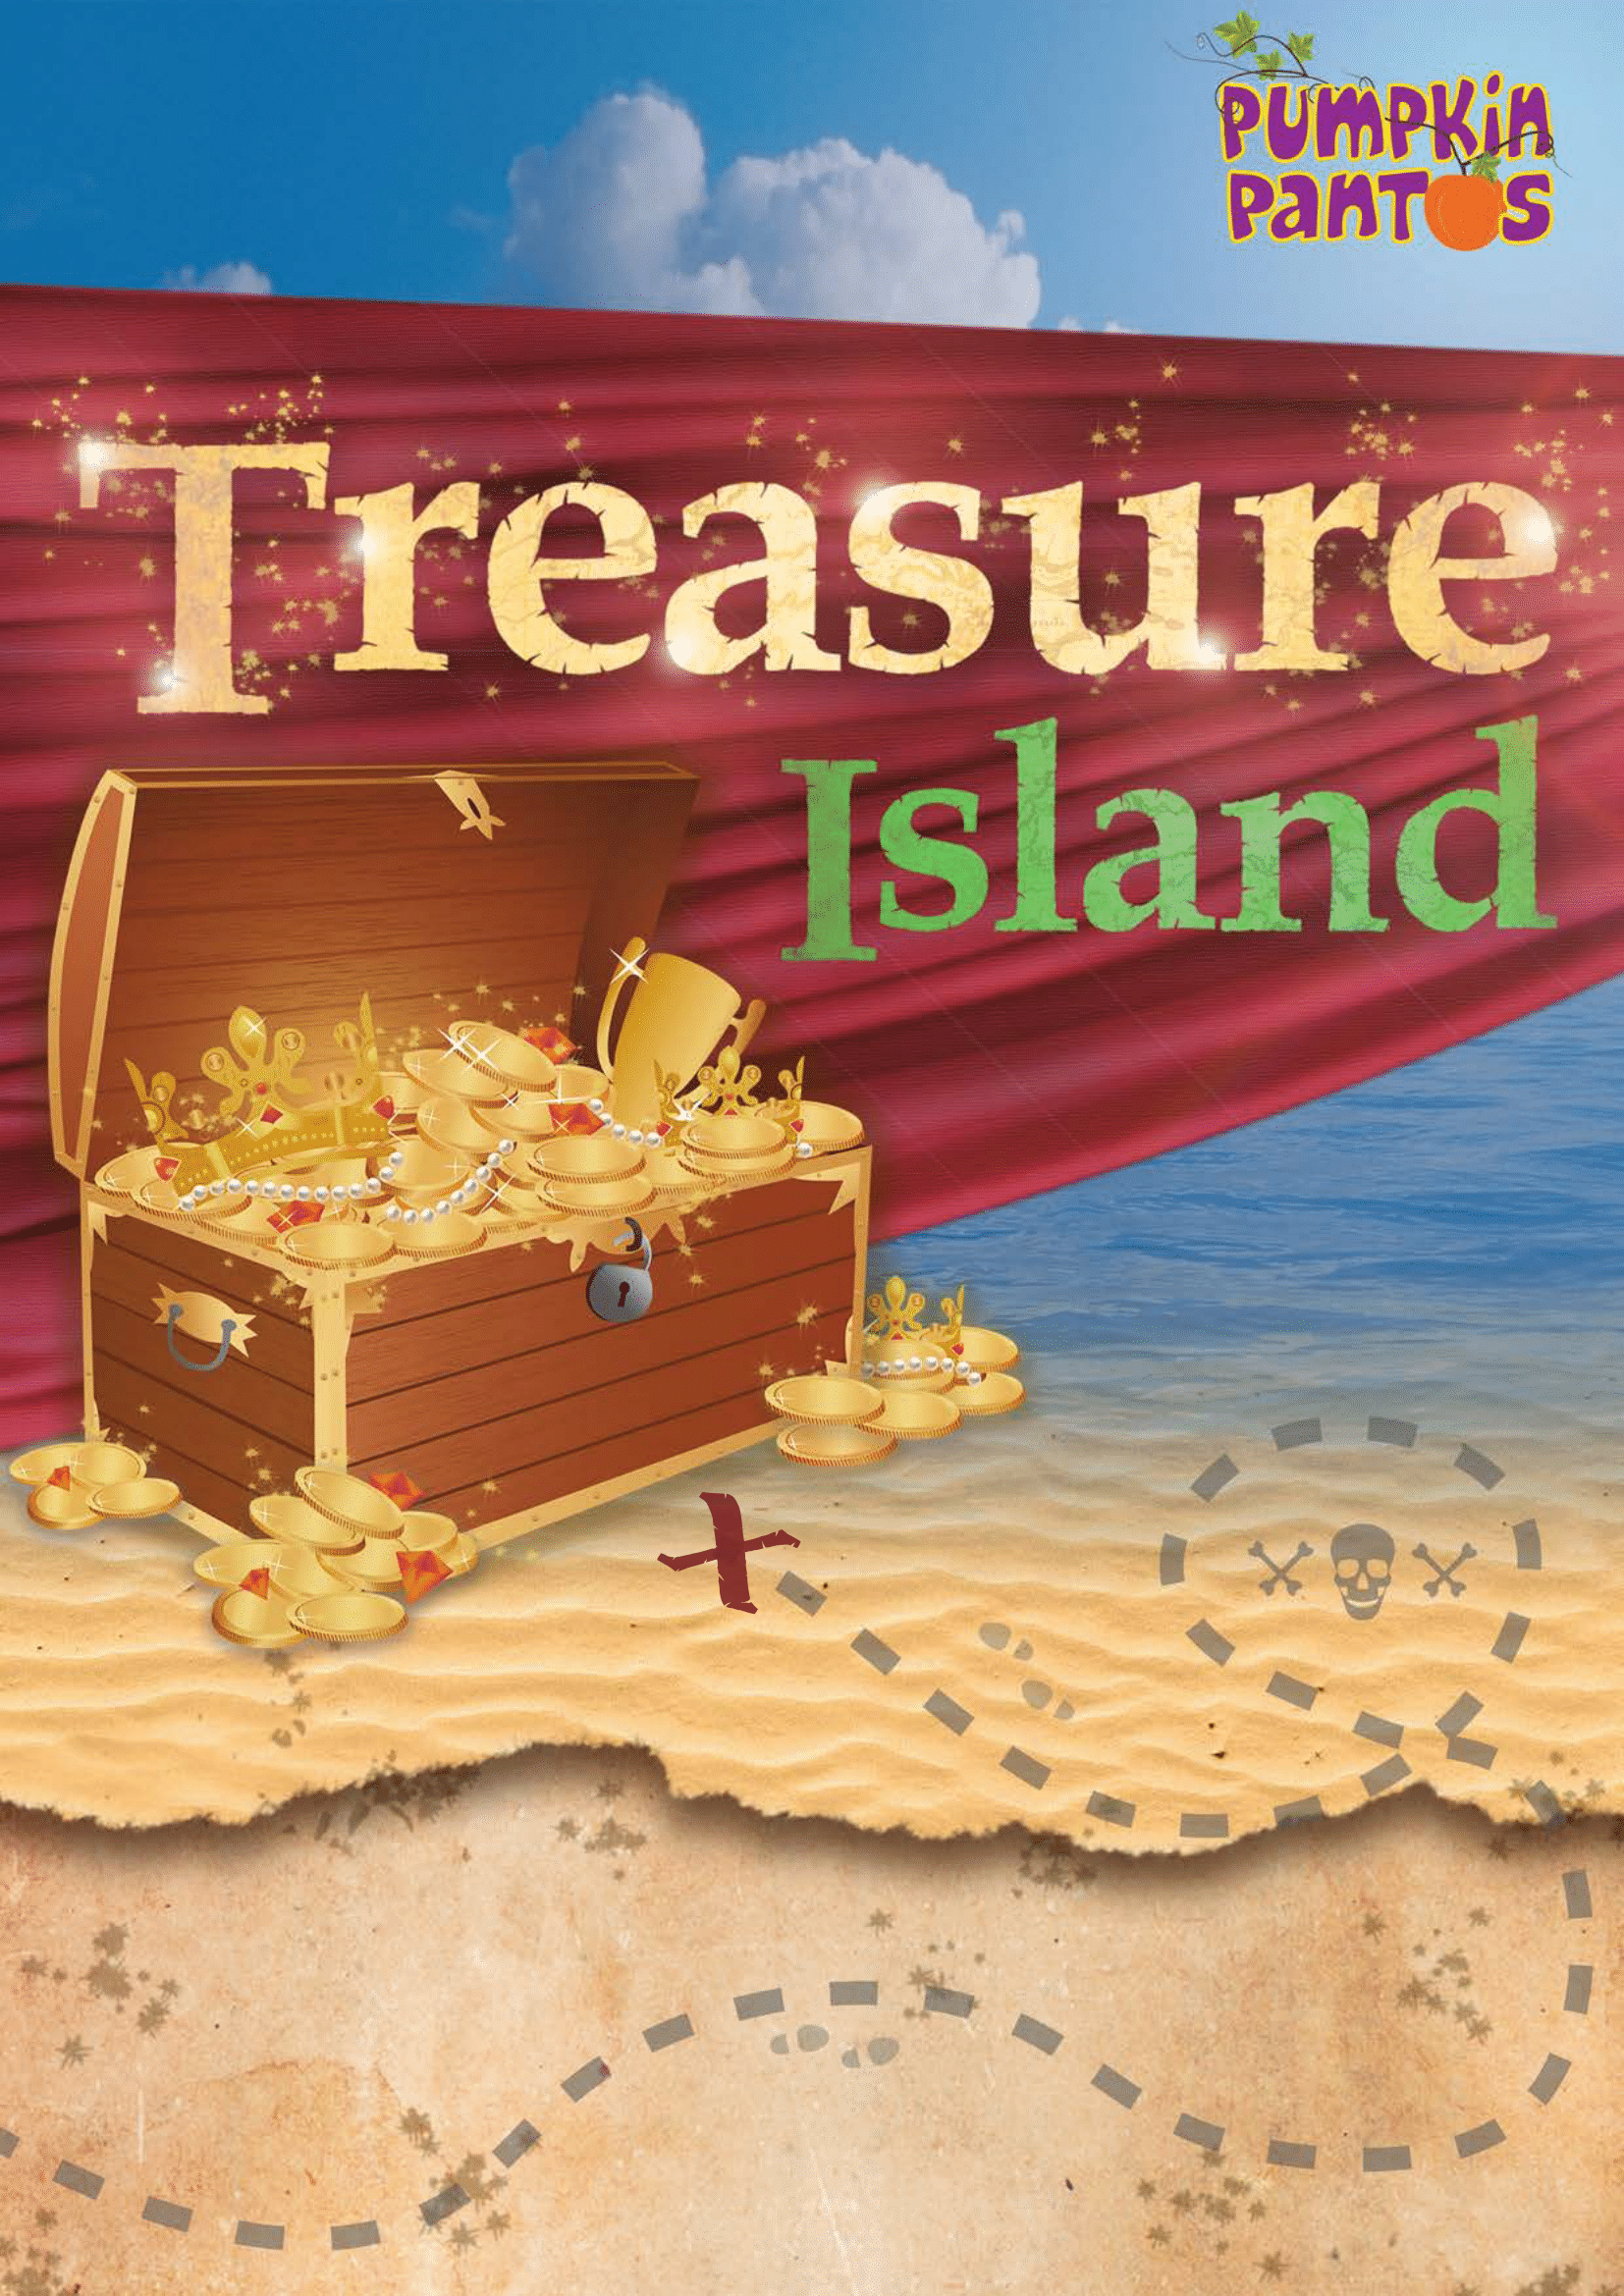 Treasure Island event image